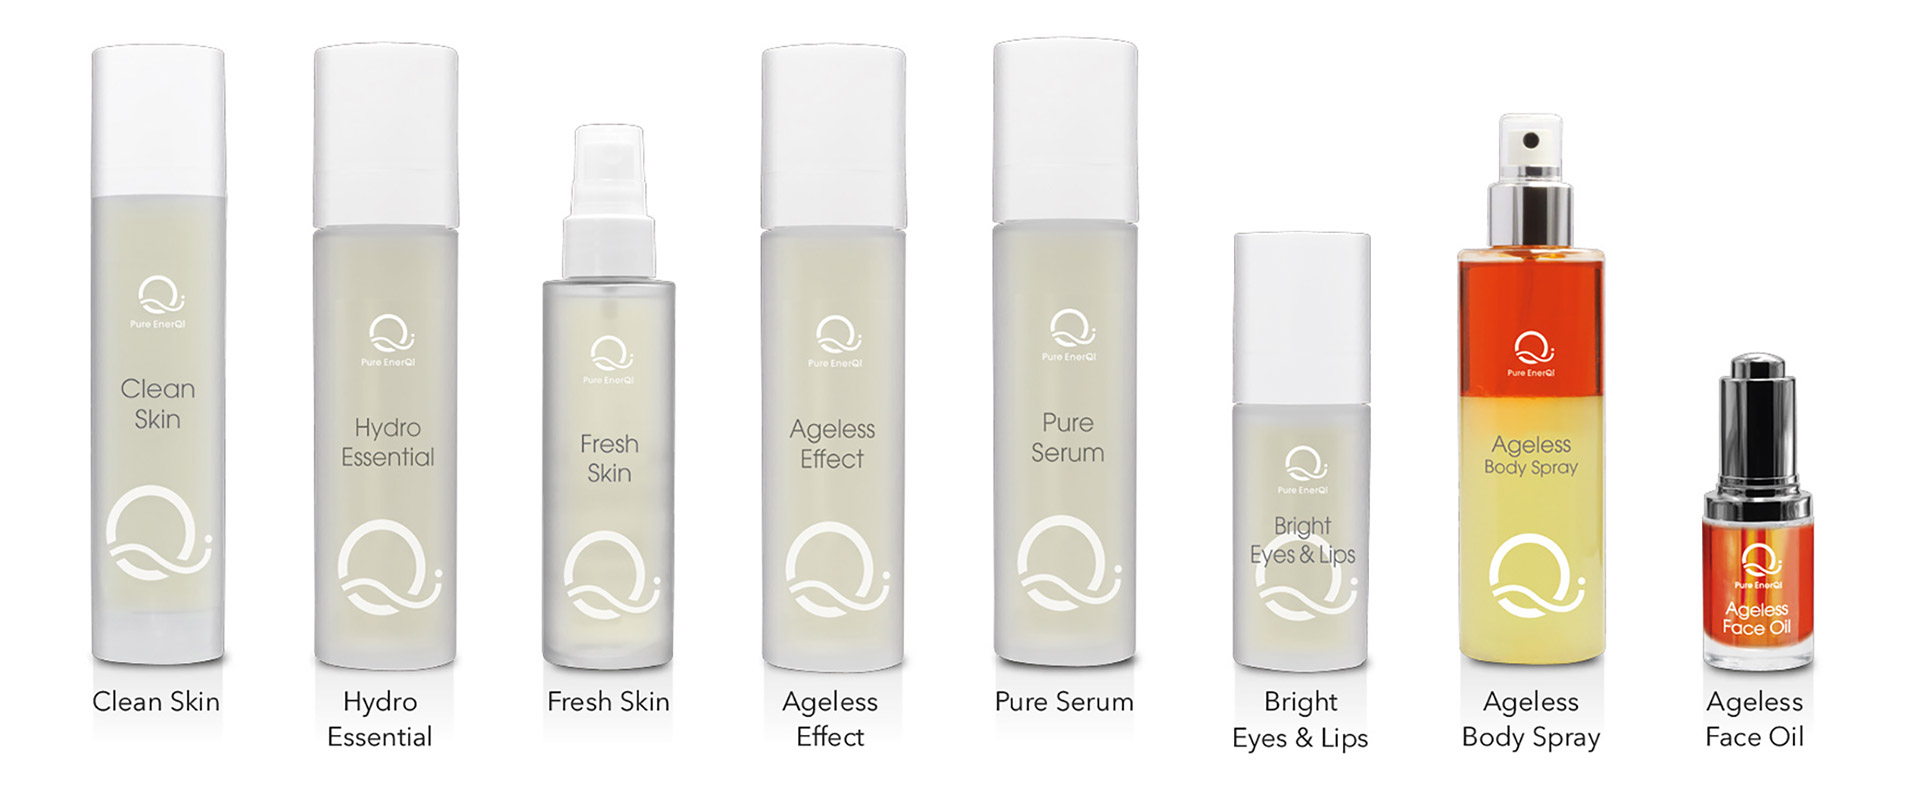 Pure EnerQi Beauty Produkte - Clean Skin, Hydro Essential, Fresh Skin, Ageless Effect, Pure Serum, Bright Eyes & Lips, Ageless Body Spray und Ageless Face Oil